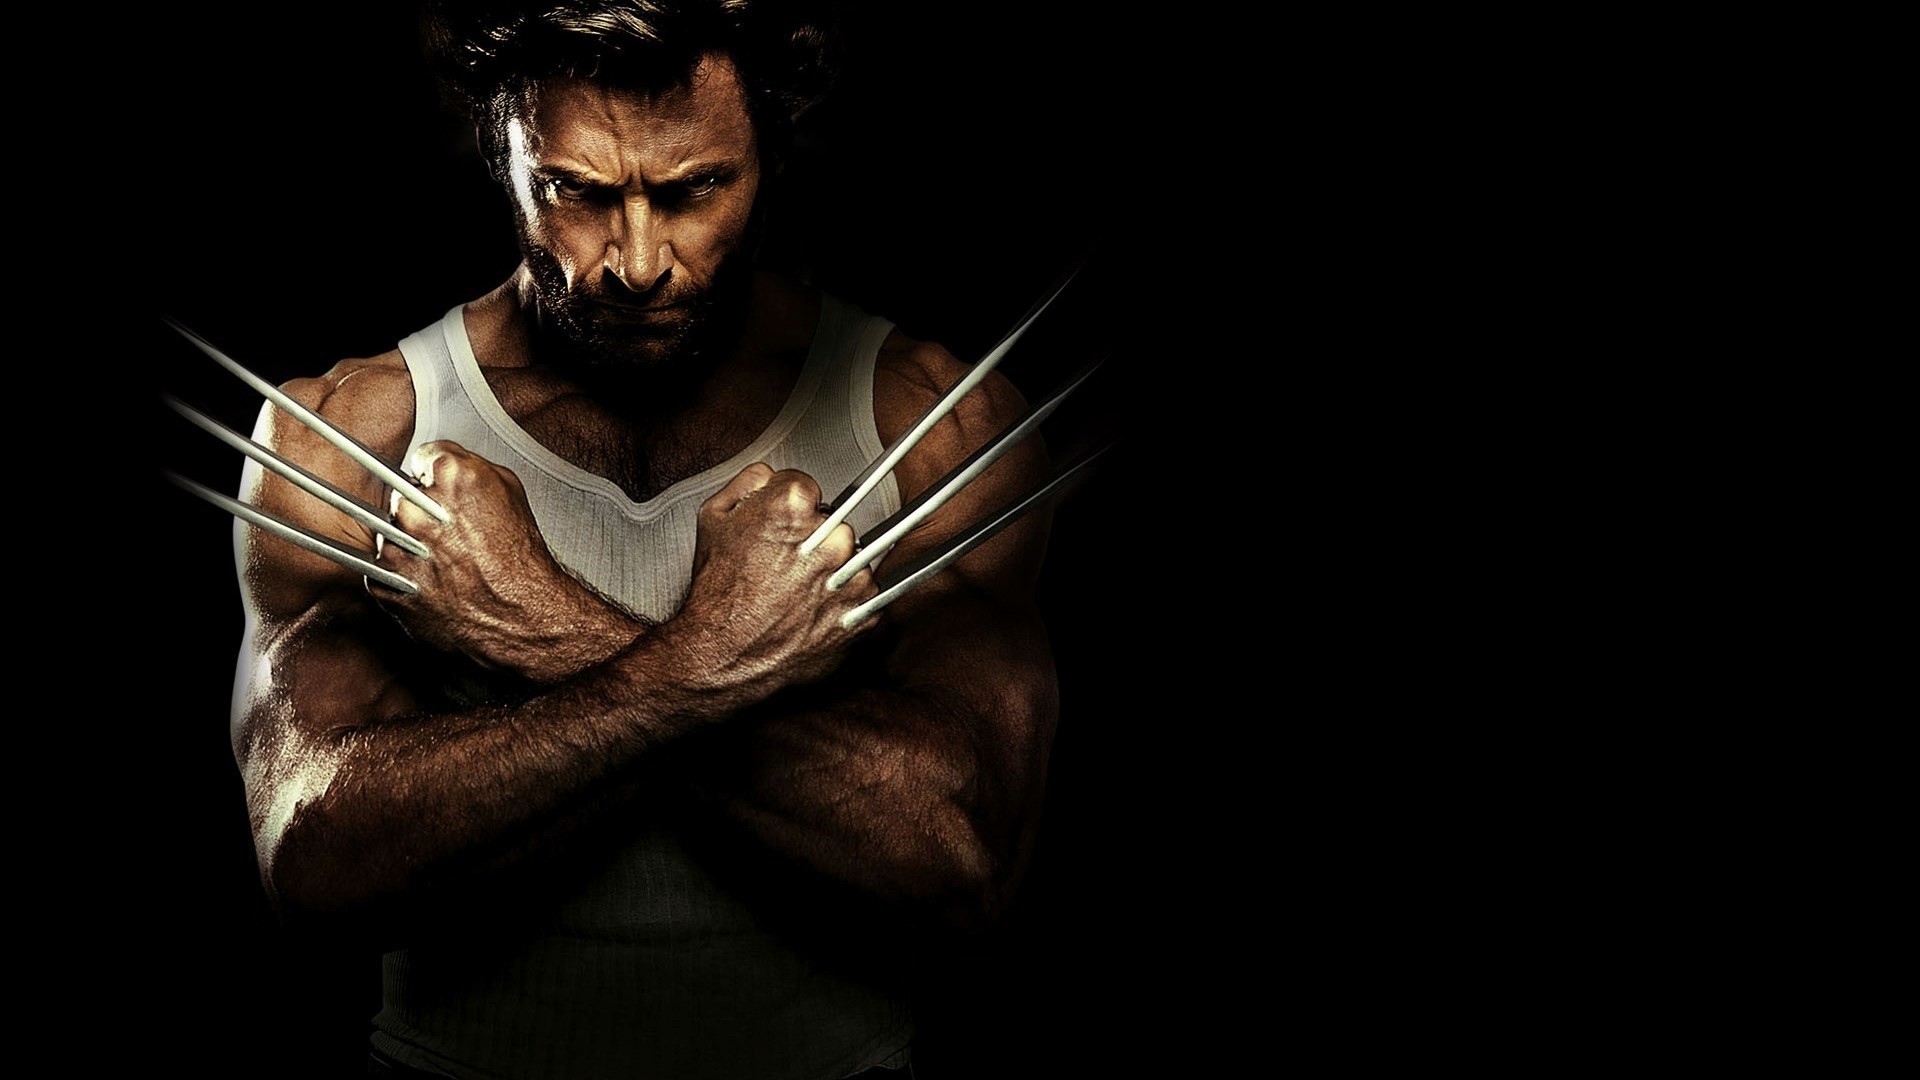 Wolverine Image